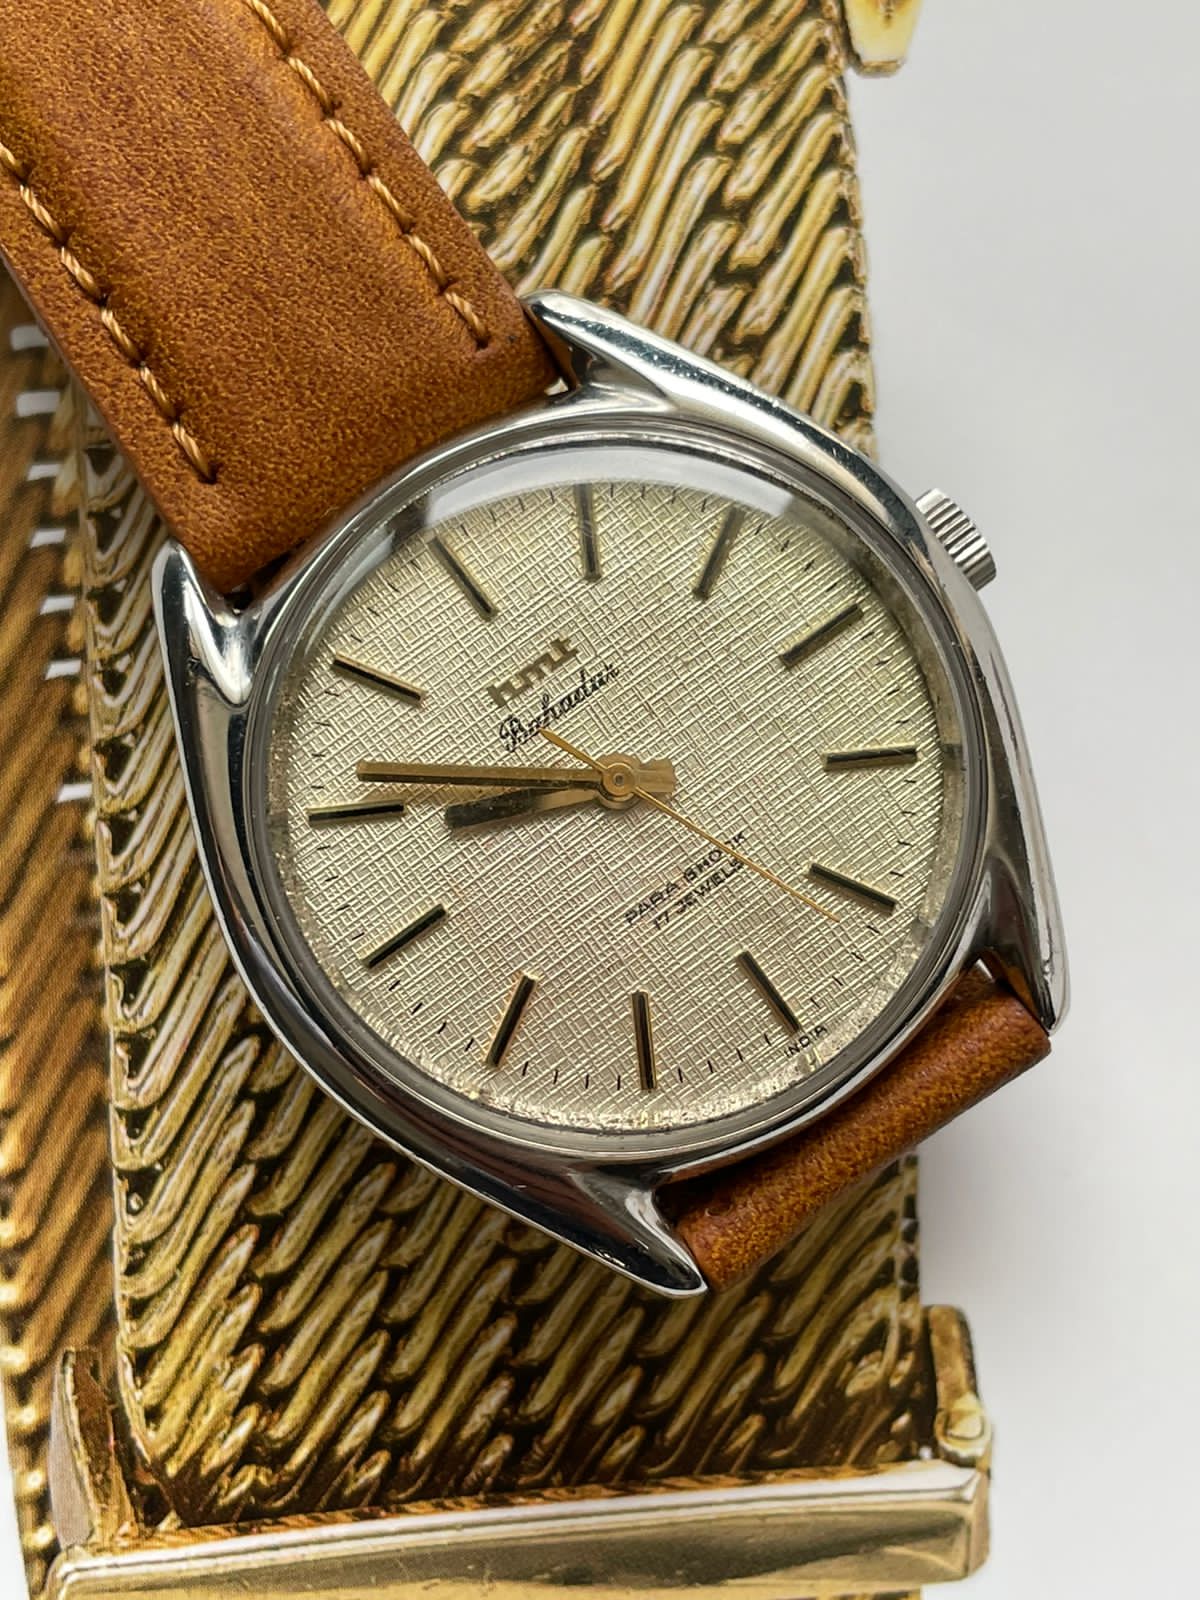 Rare HMT NASS 09 White Numeric Automatic Men's Wrist Watch Case 40 mm | eBay